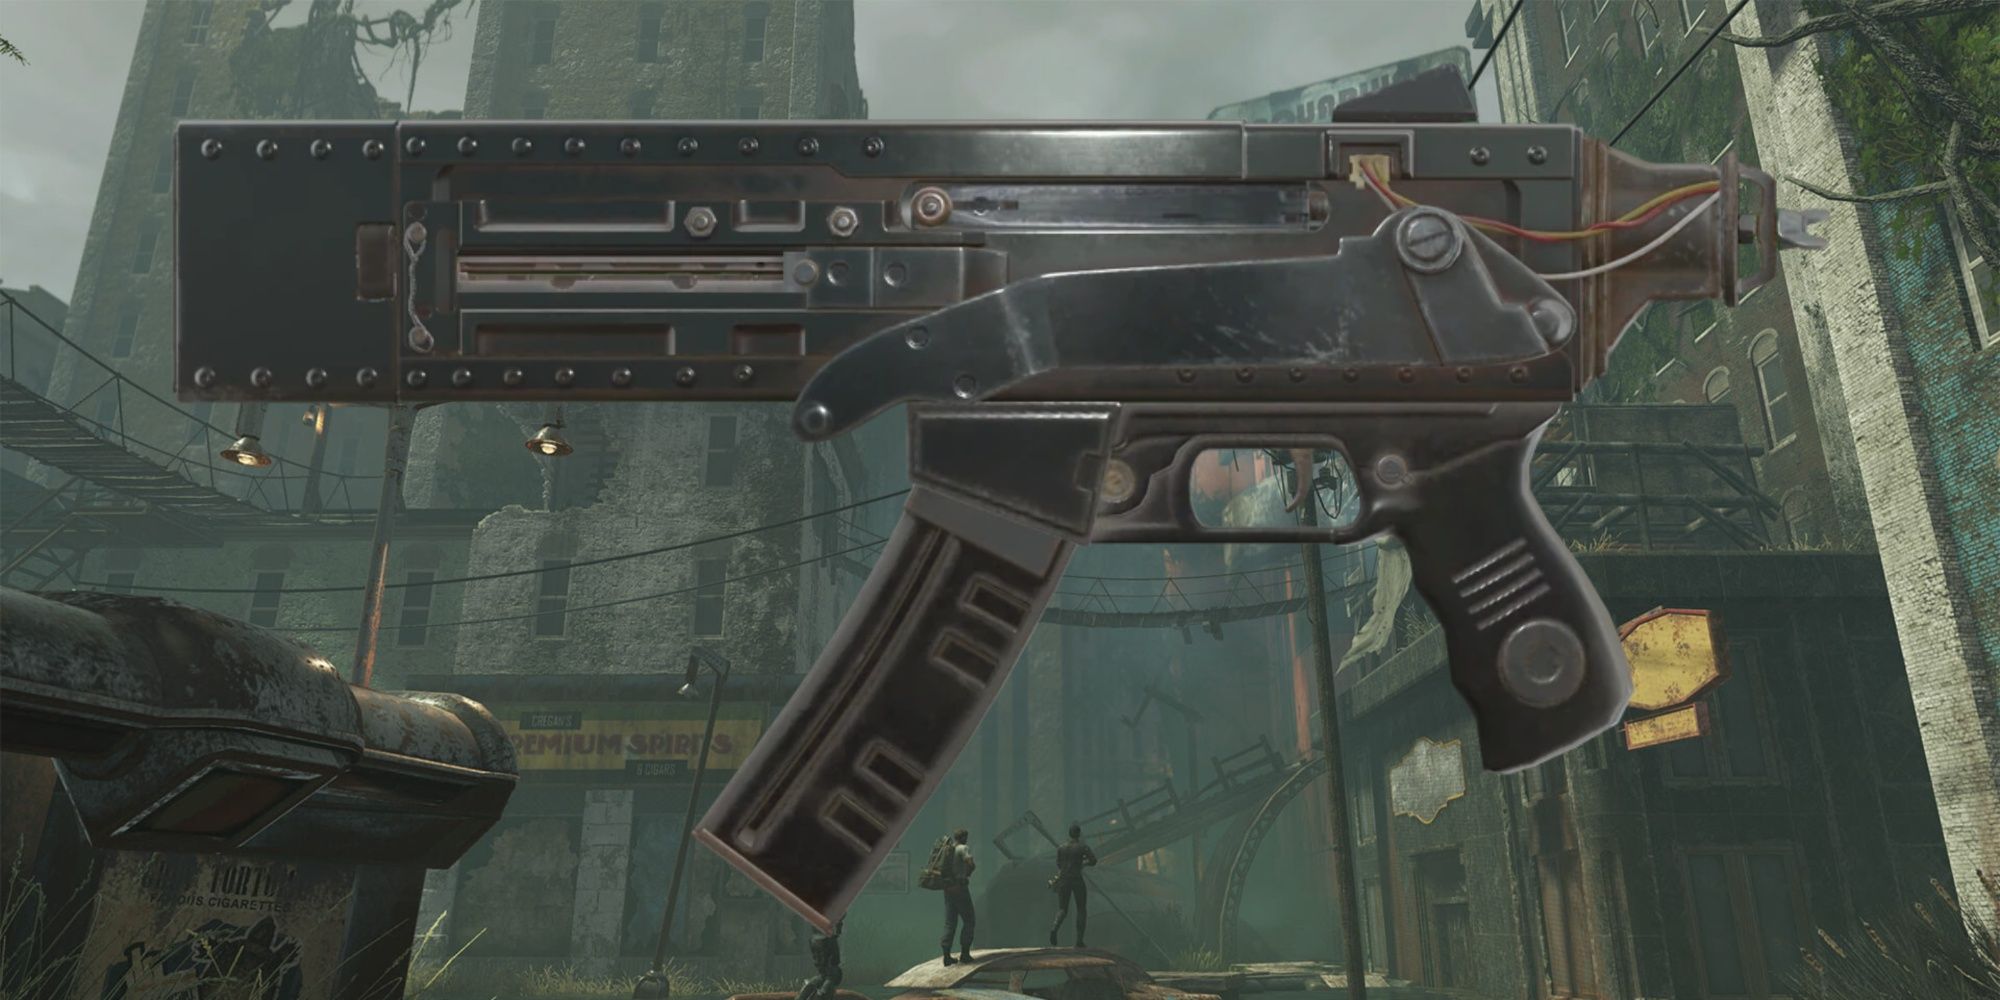 10mm Submachine Gun In Fallout 76